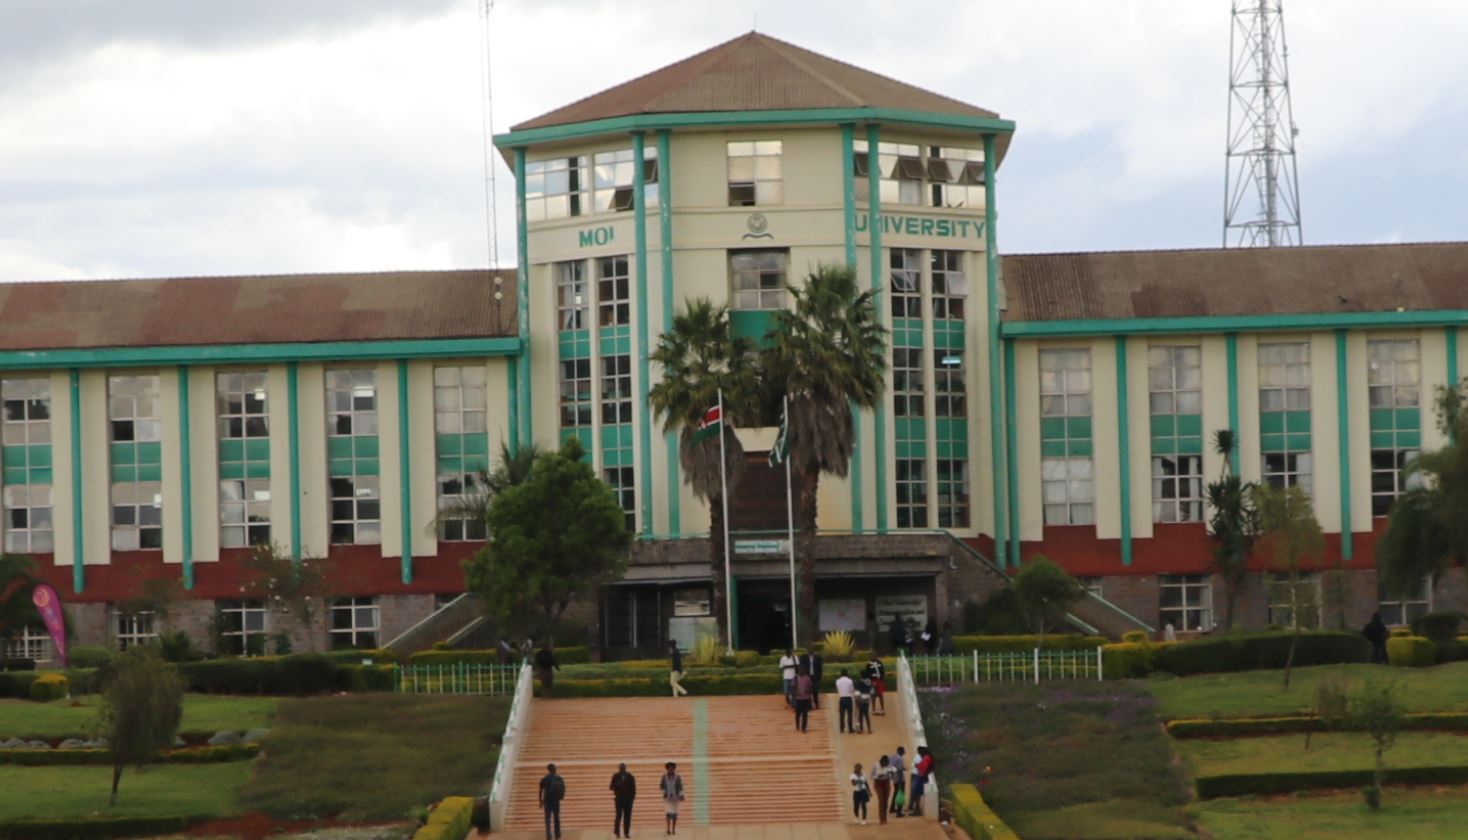 Moi University is broke, workers surviving on fuliza